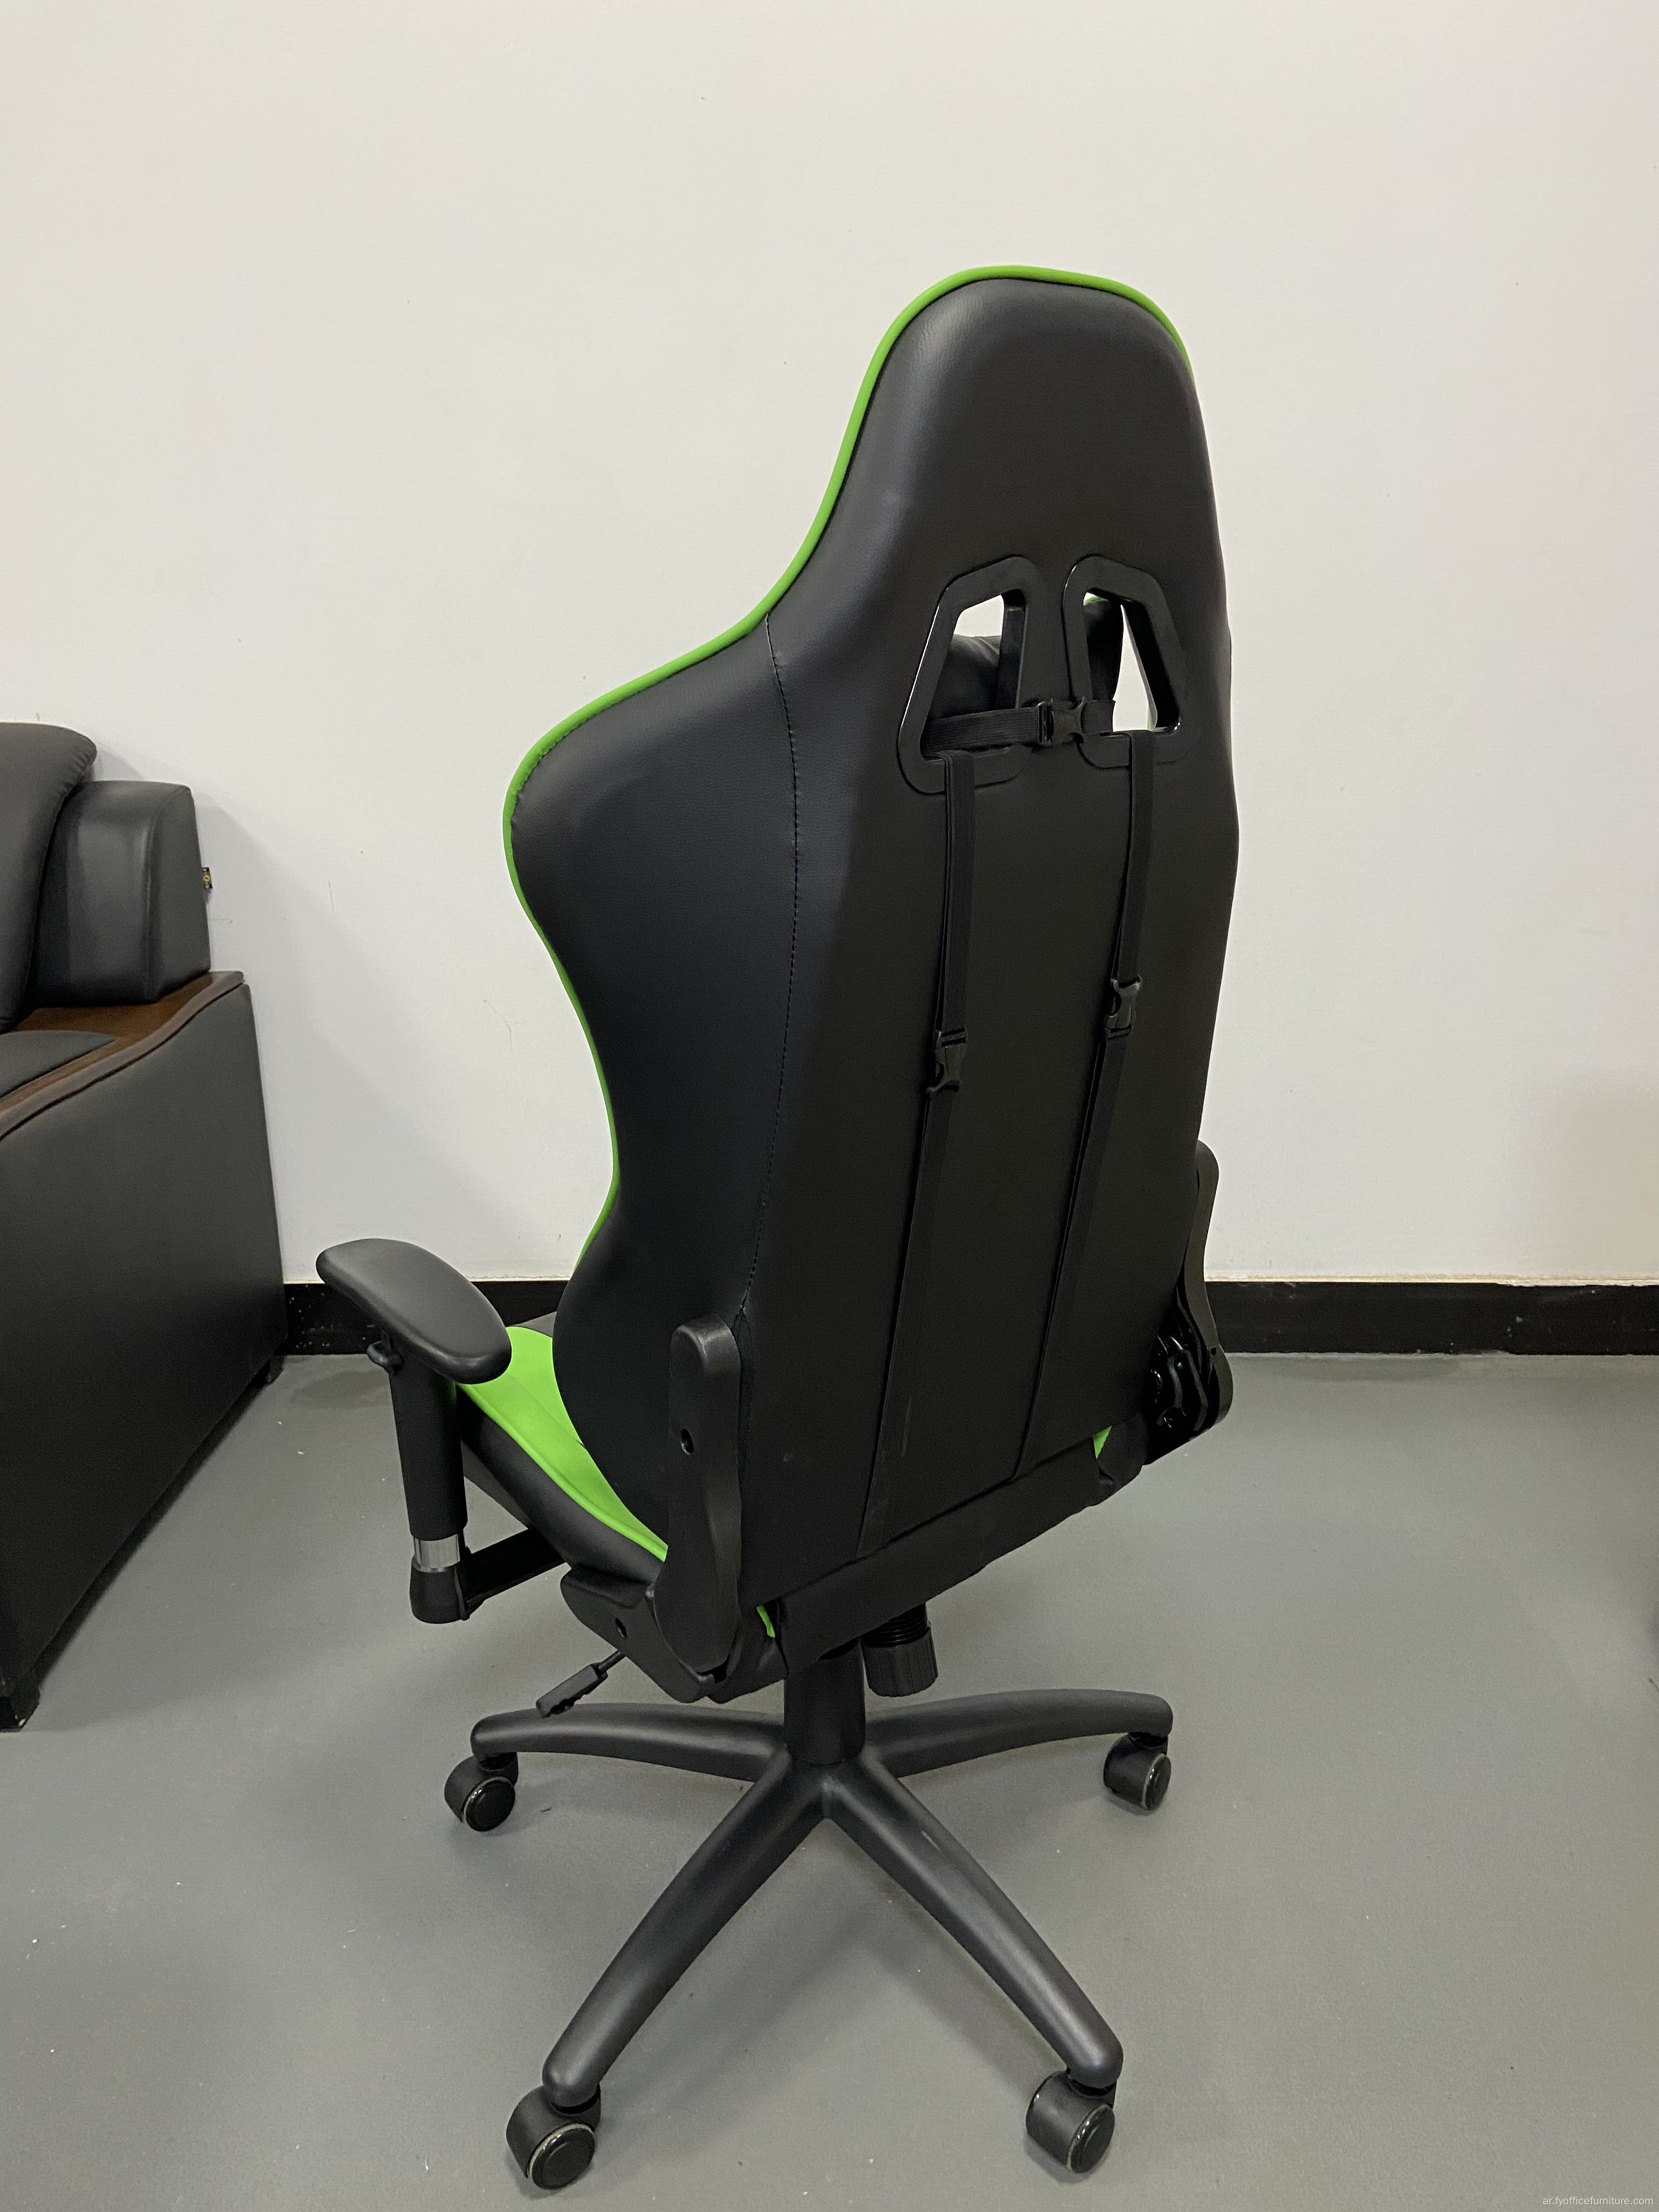 EX-Factory Price Racing Chair 4D مسند ذراع قابل للتعديل مع مقعد دلو